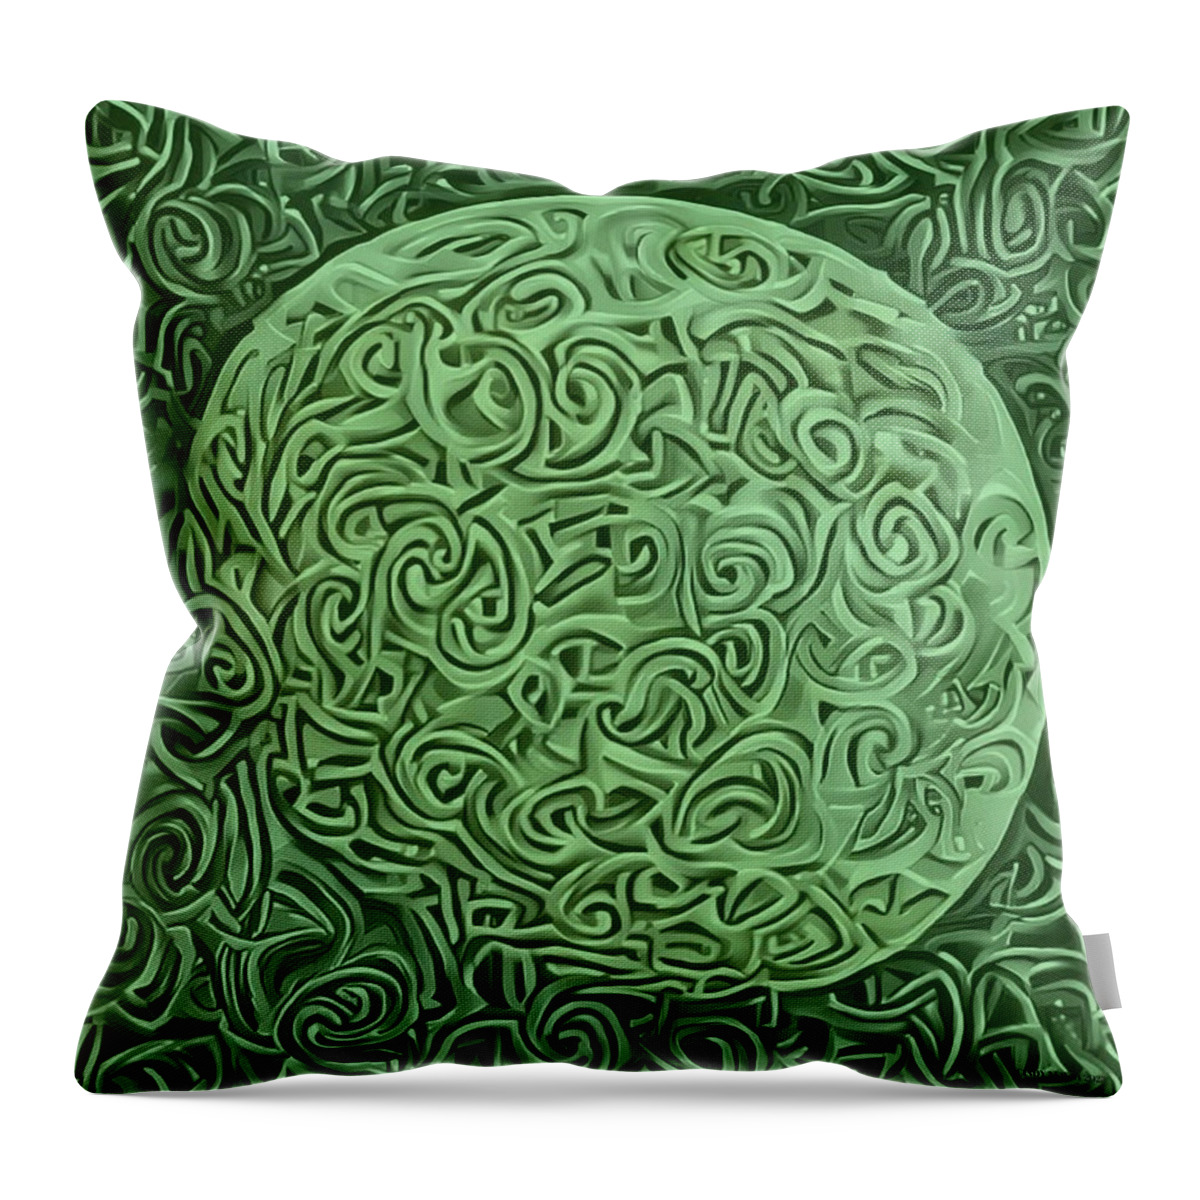 Digital Throw Pillow featuring the digital art Celtic Moon by Cindy's Creative Corner